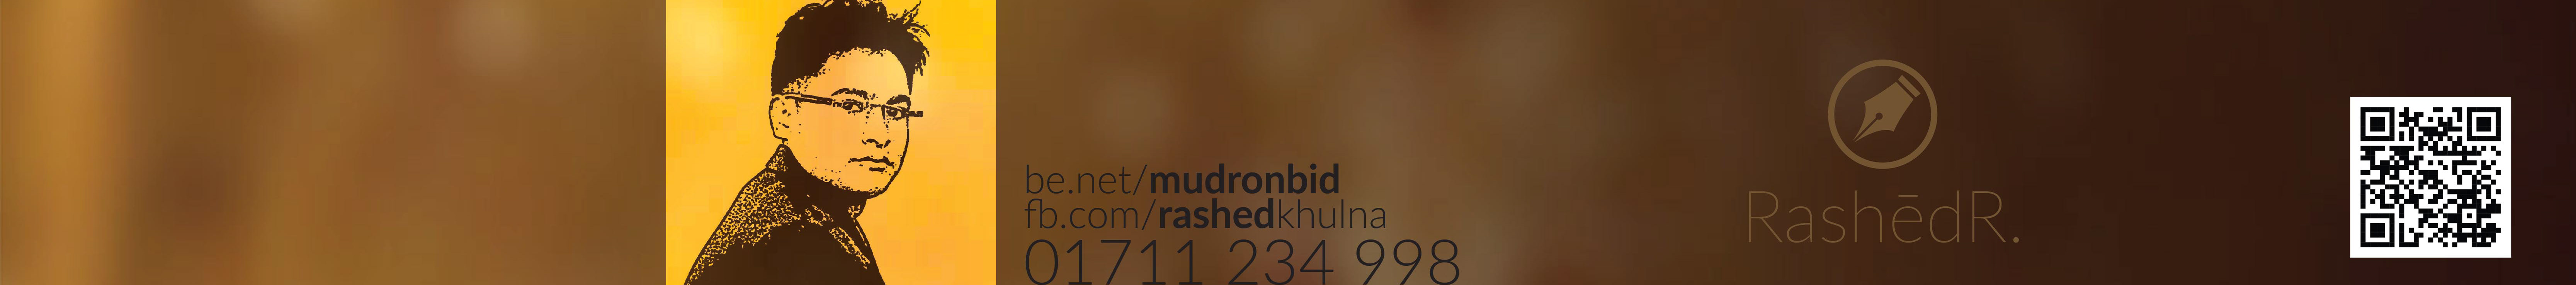 Rashed Rana's profile banner